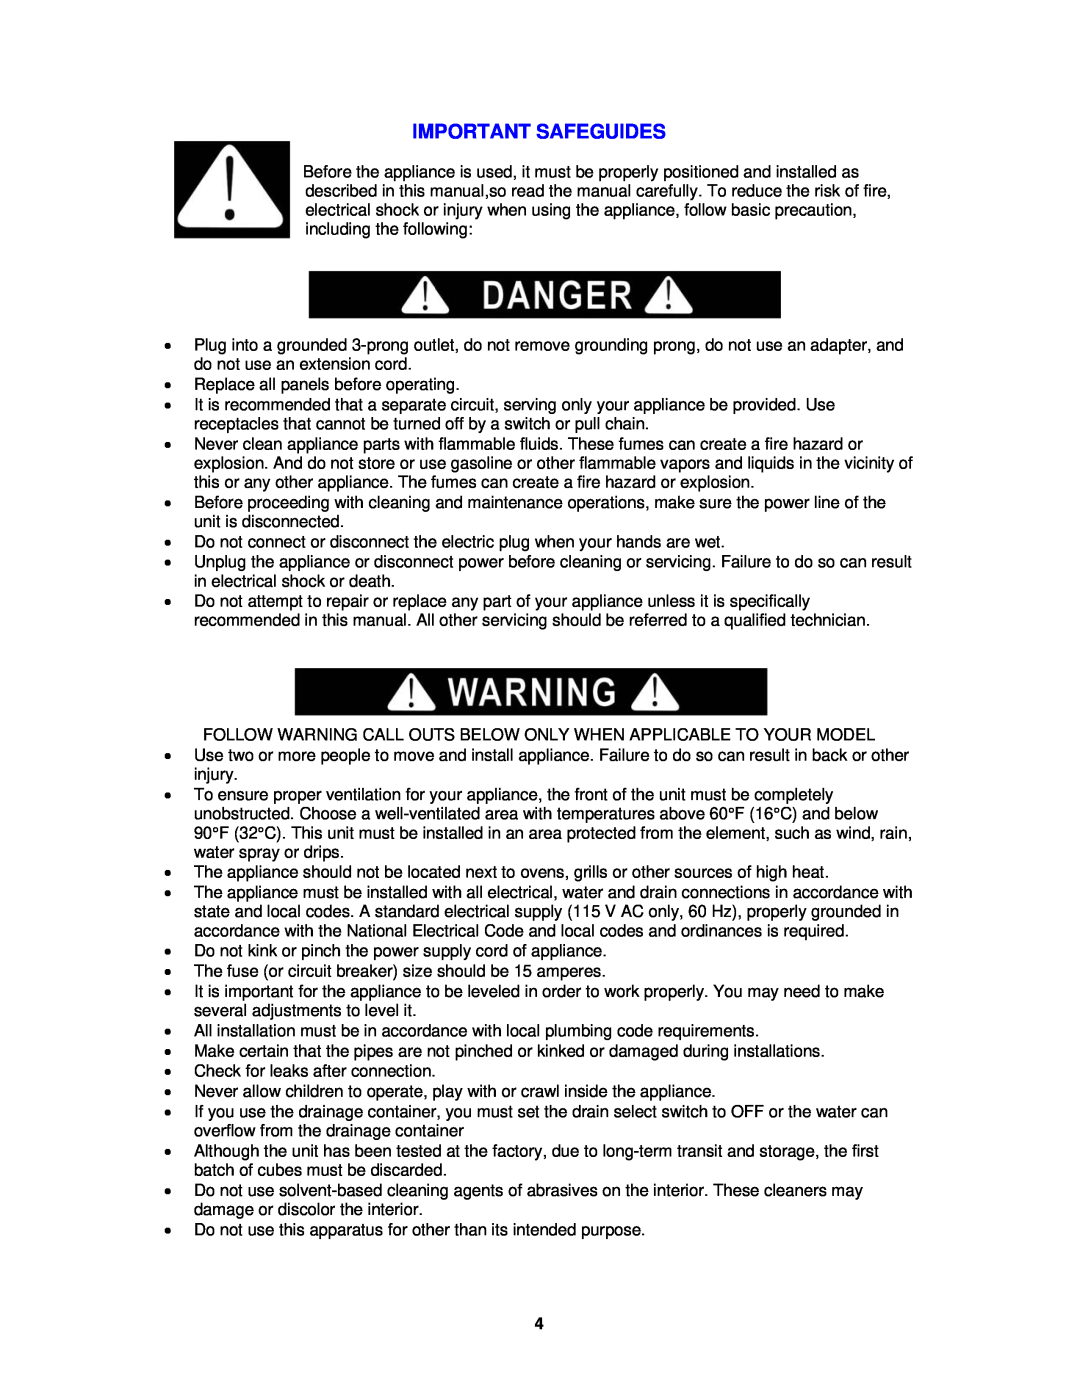 Avanti BD7000 instruction manual Important Safeguides 